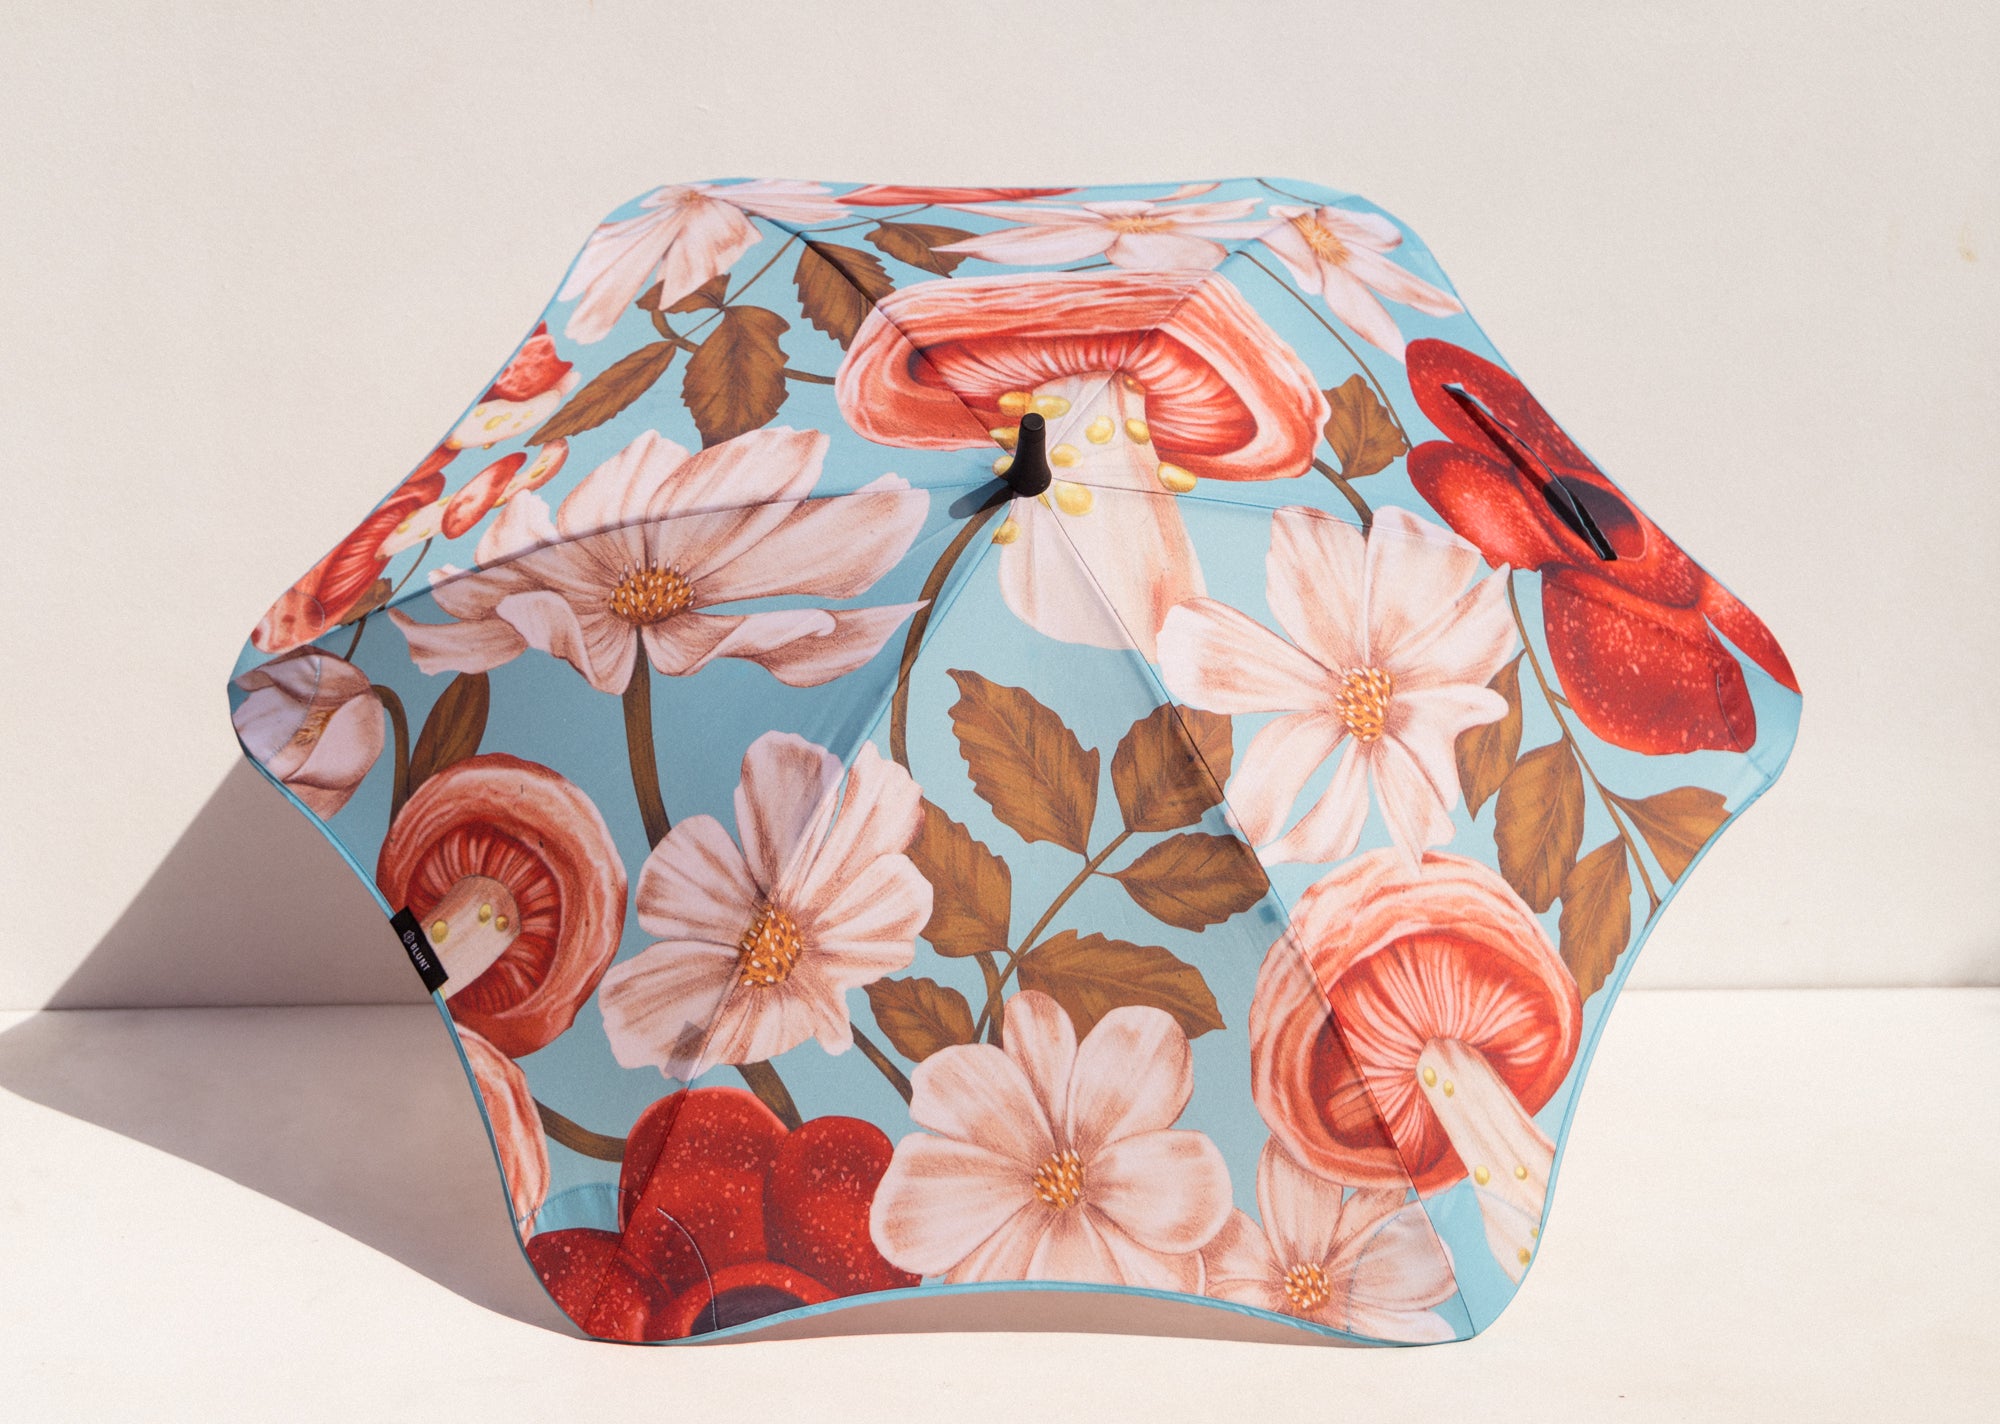 Kelly Thompson Blunt Umbrellas Blooms and Shrooms umbrella design collaboration illustration